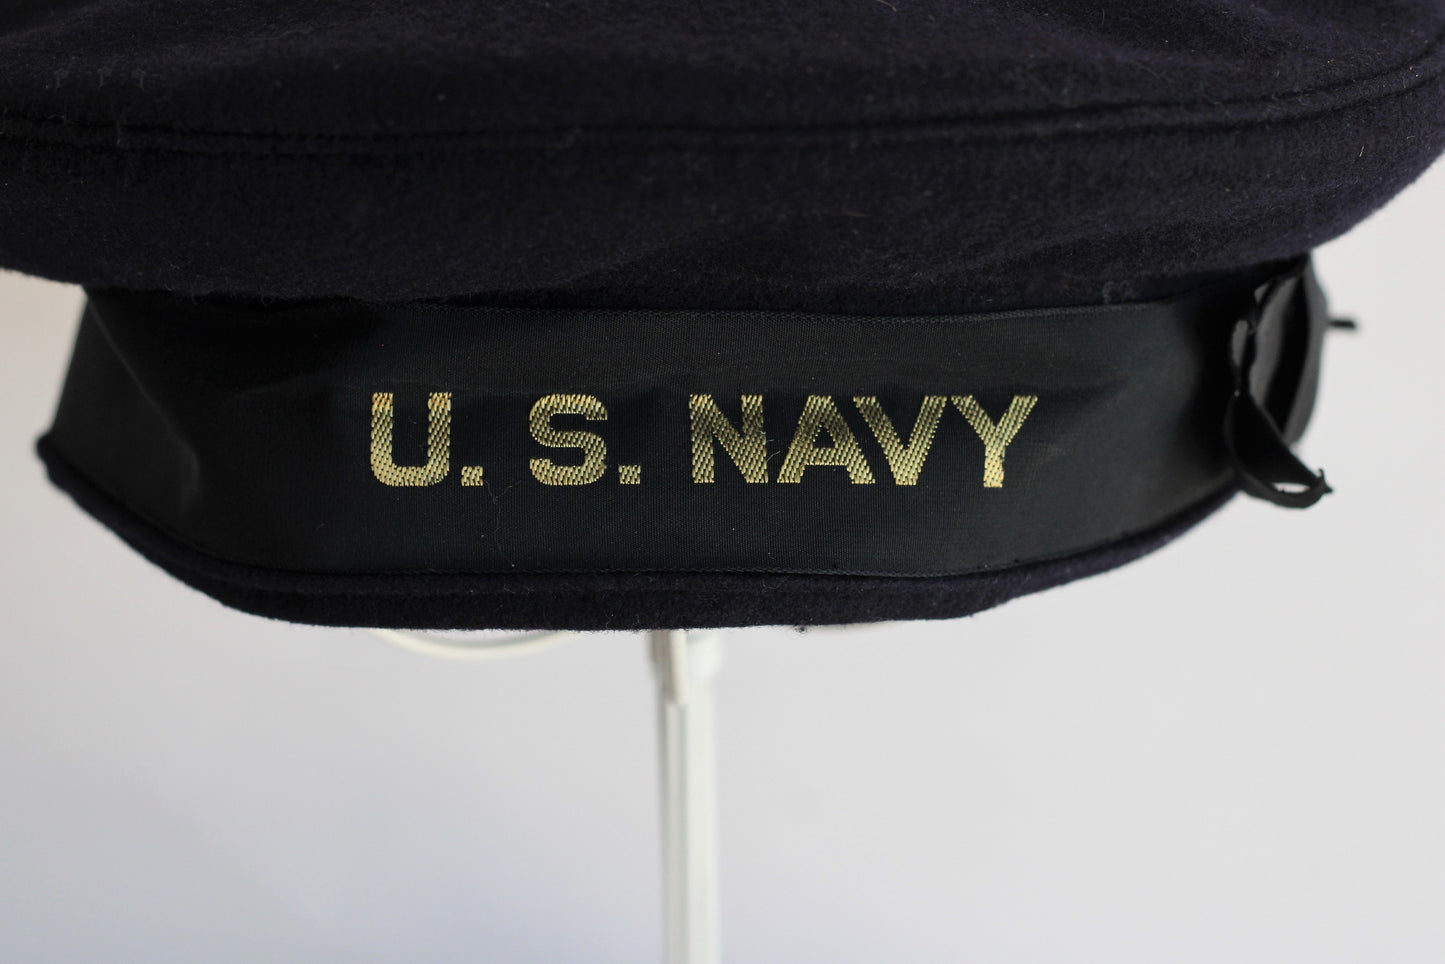 Vintage 1940s US Navy Hat